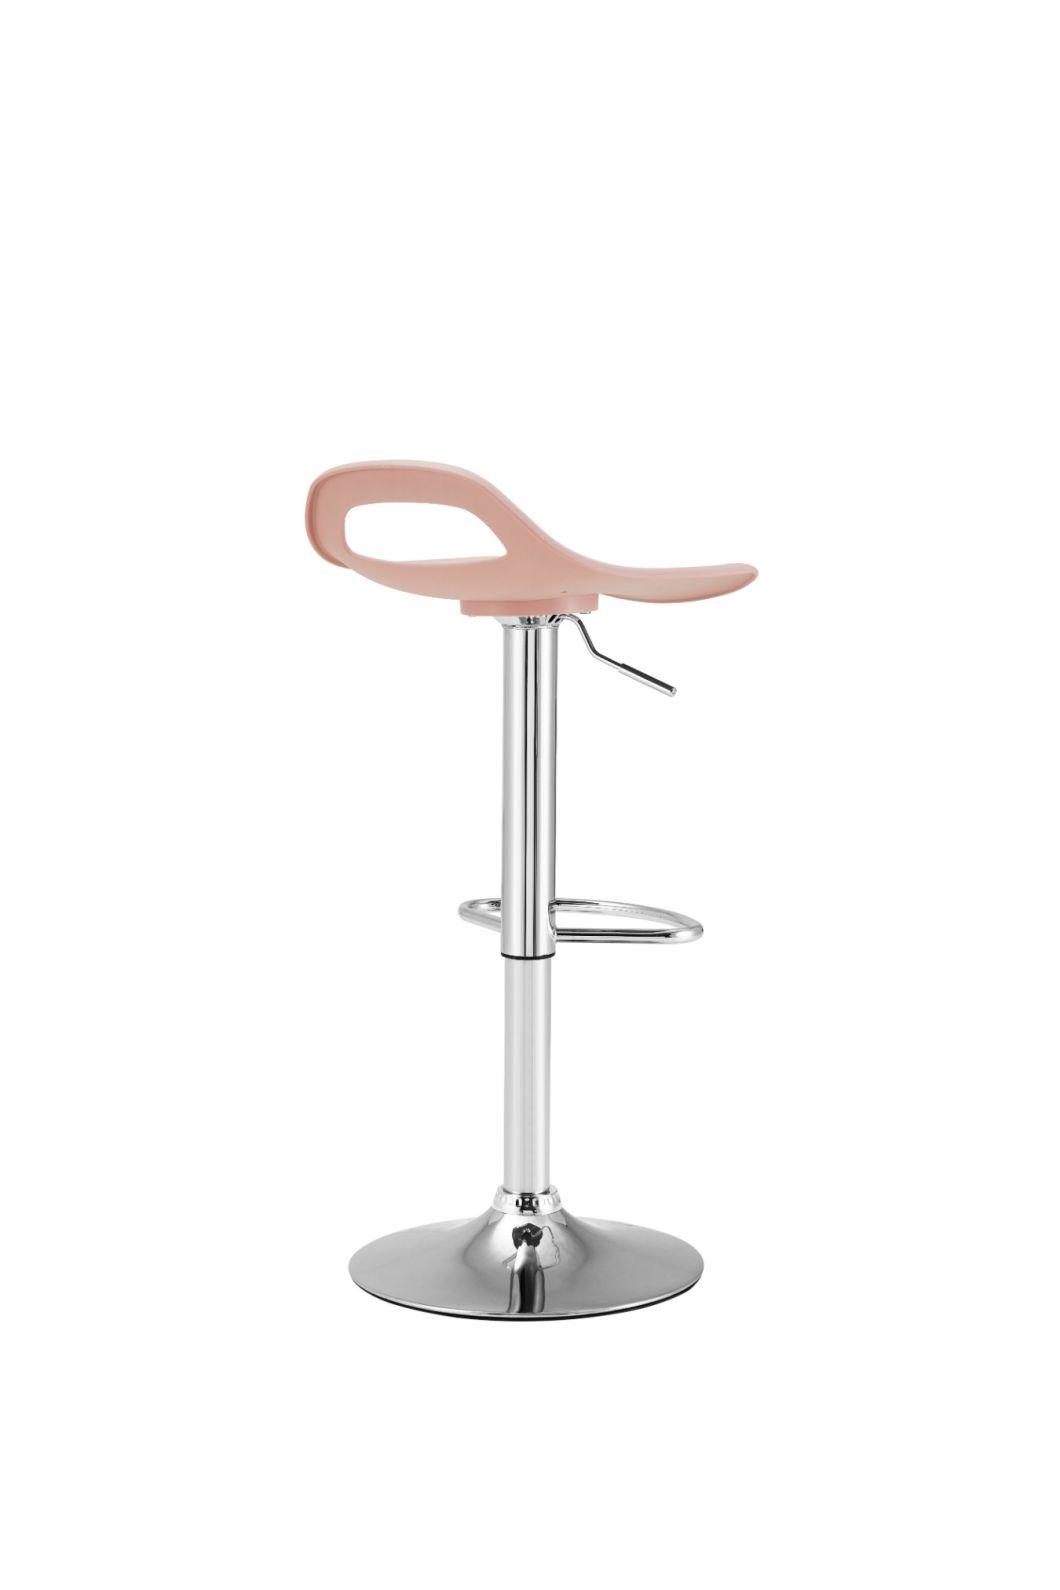 Nordic Modern Design Stainless Steel Legs PP Plastic Seat High Bar Chair